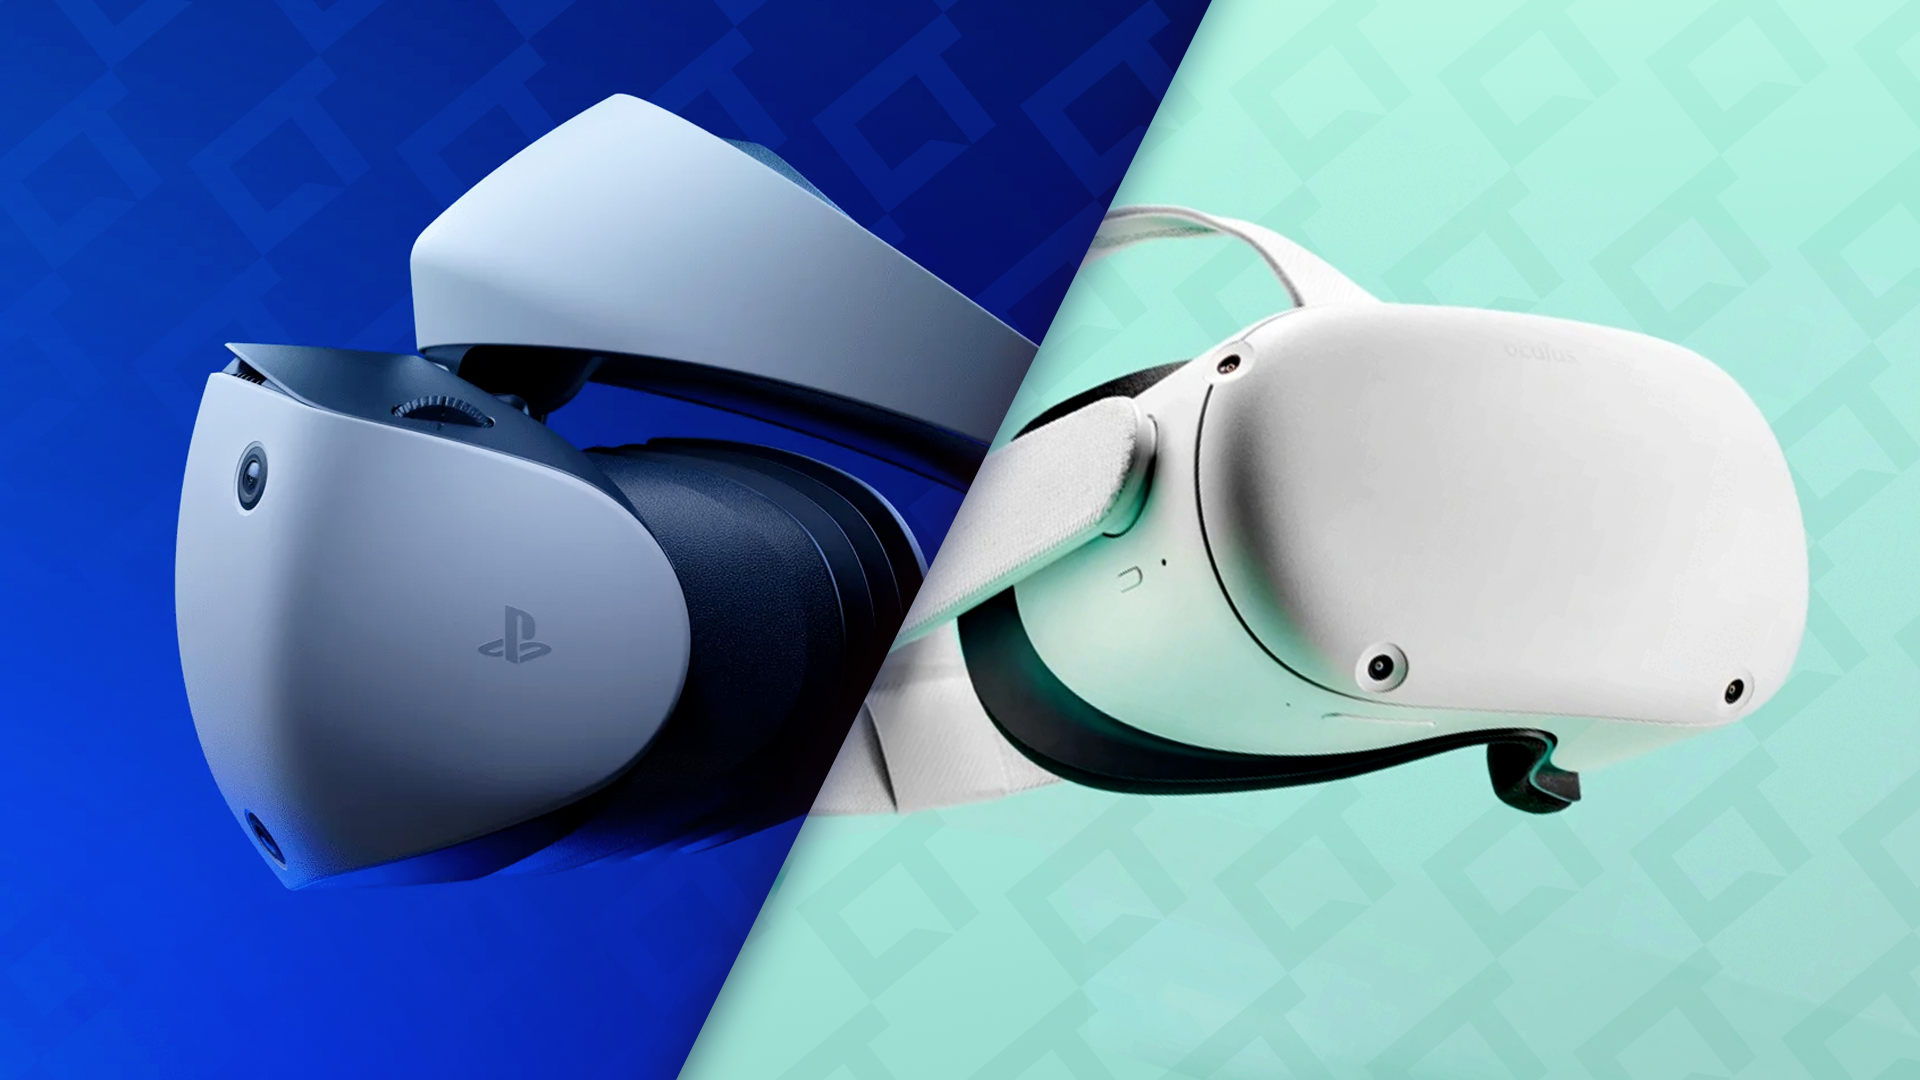 PlayStation VR2: ¿Vale la pena? 